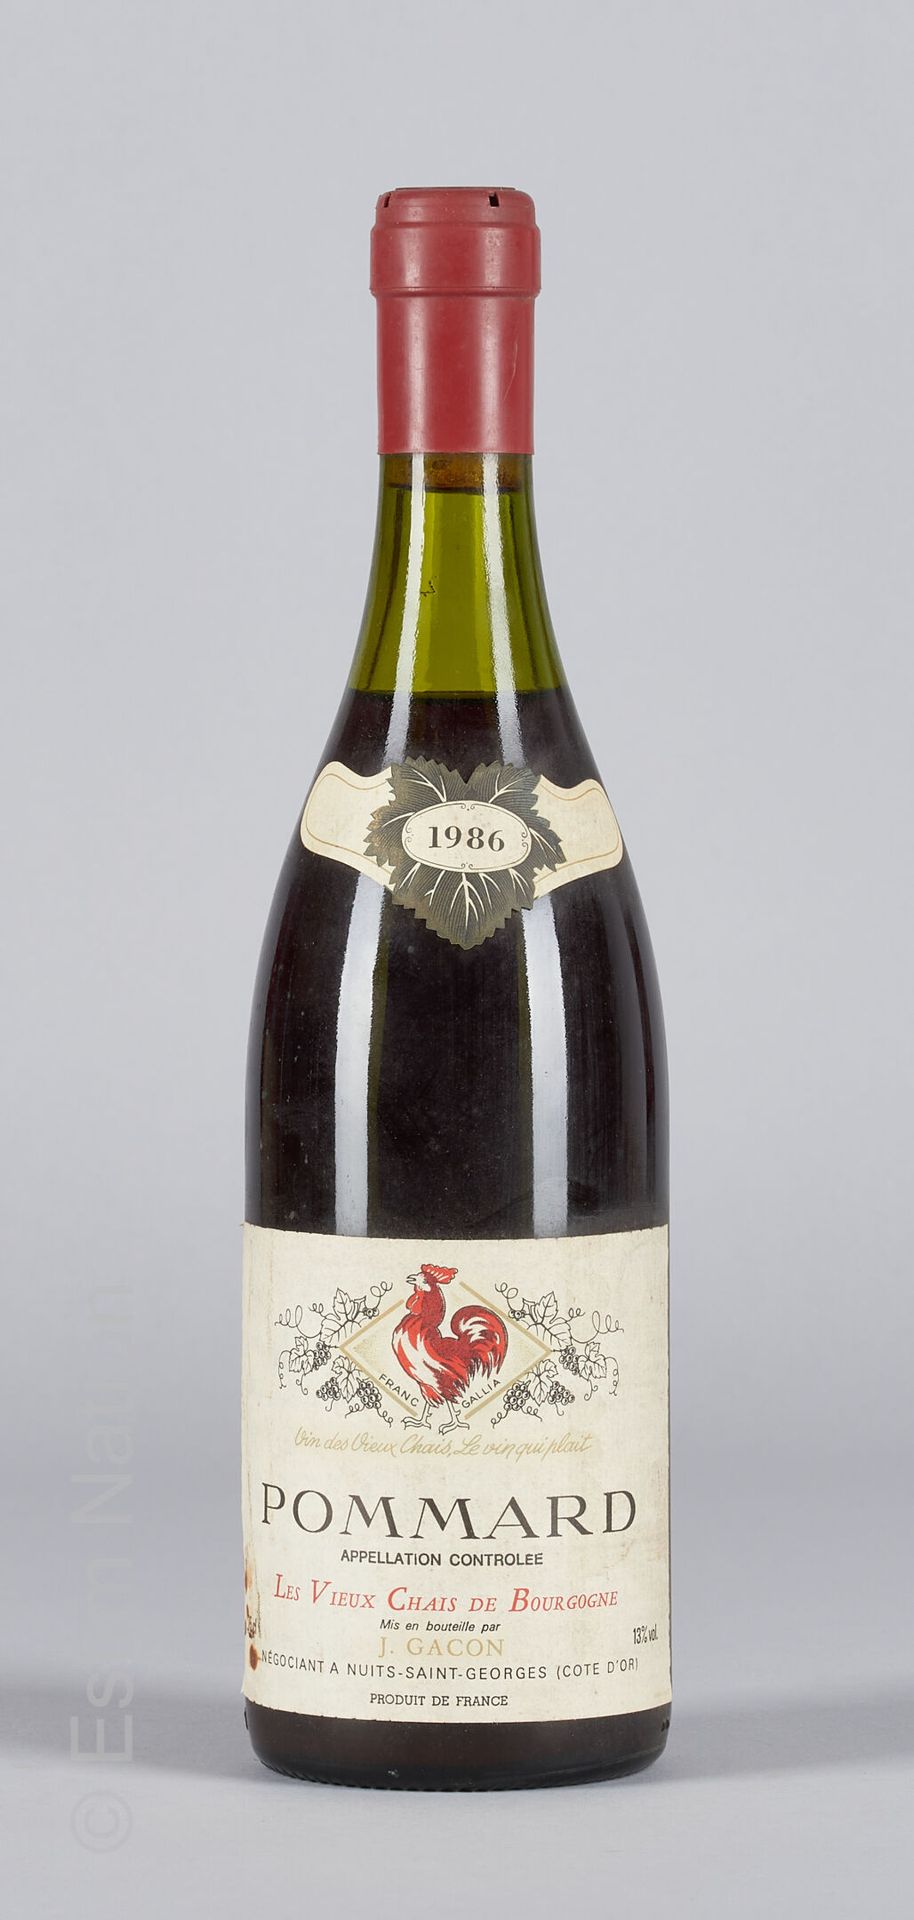 BOURGOGNE 1 bottiglia di Pommard 1986 Les vieux chais de Bourgogne J. Gacon

(N.&hellip;